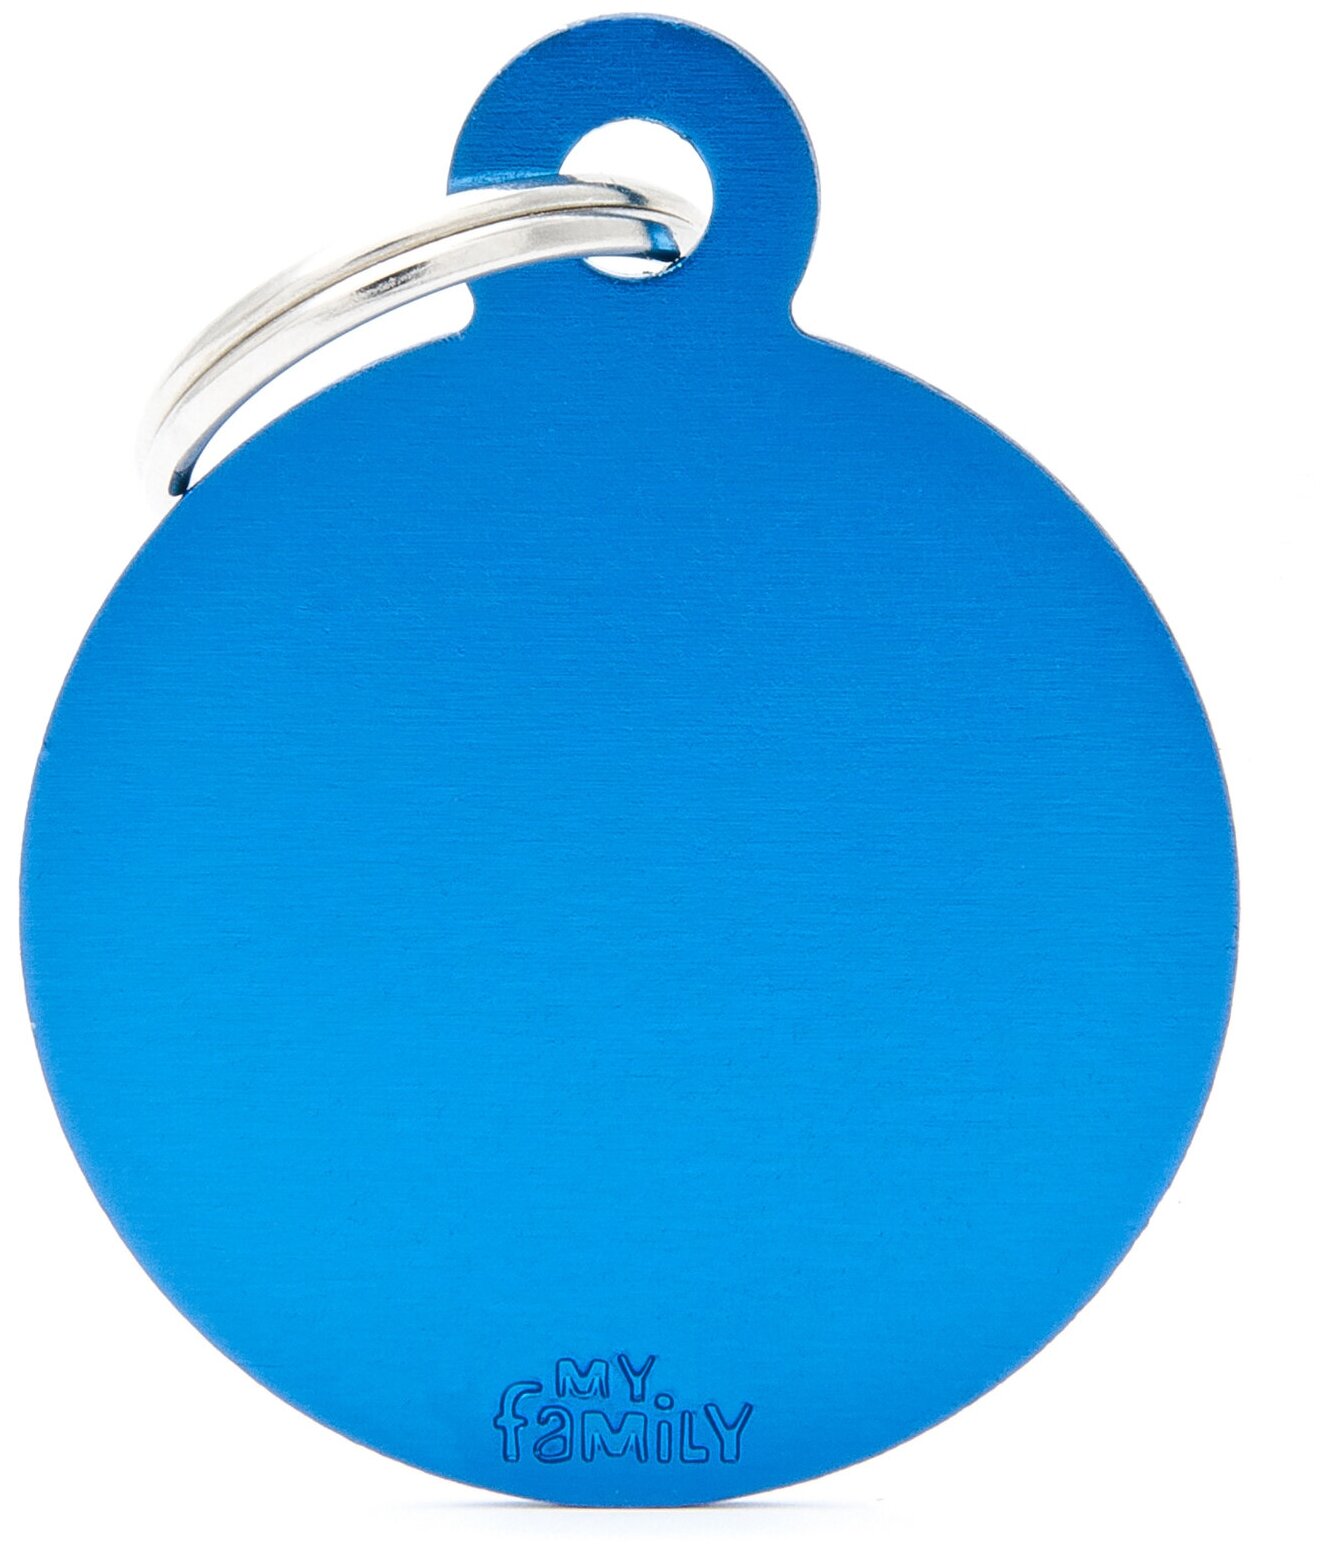 Адресник круг синий большой MFB18 0,0275 кг 60284